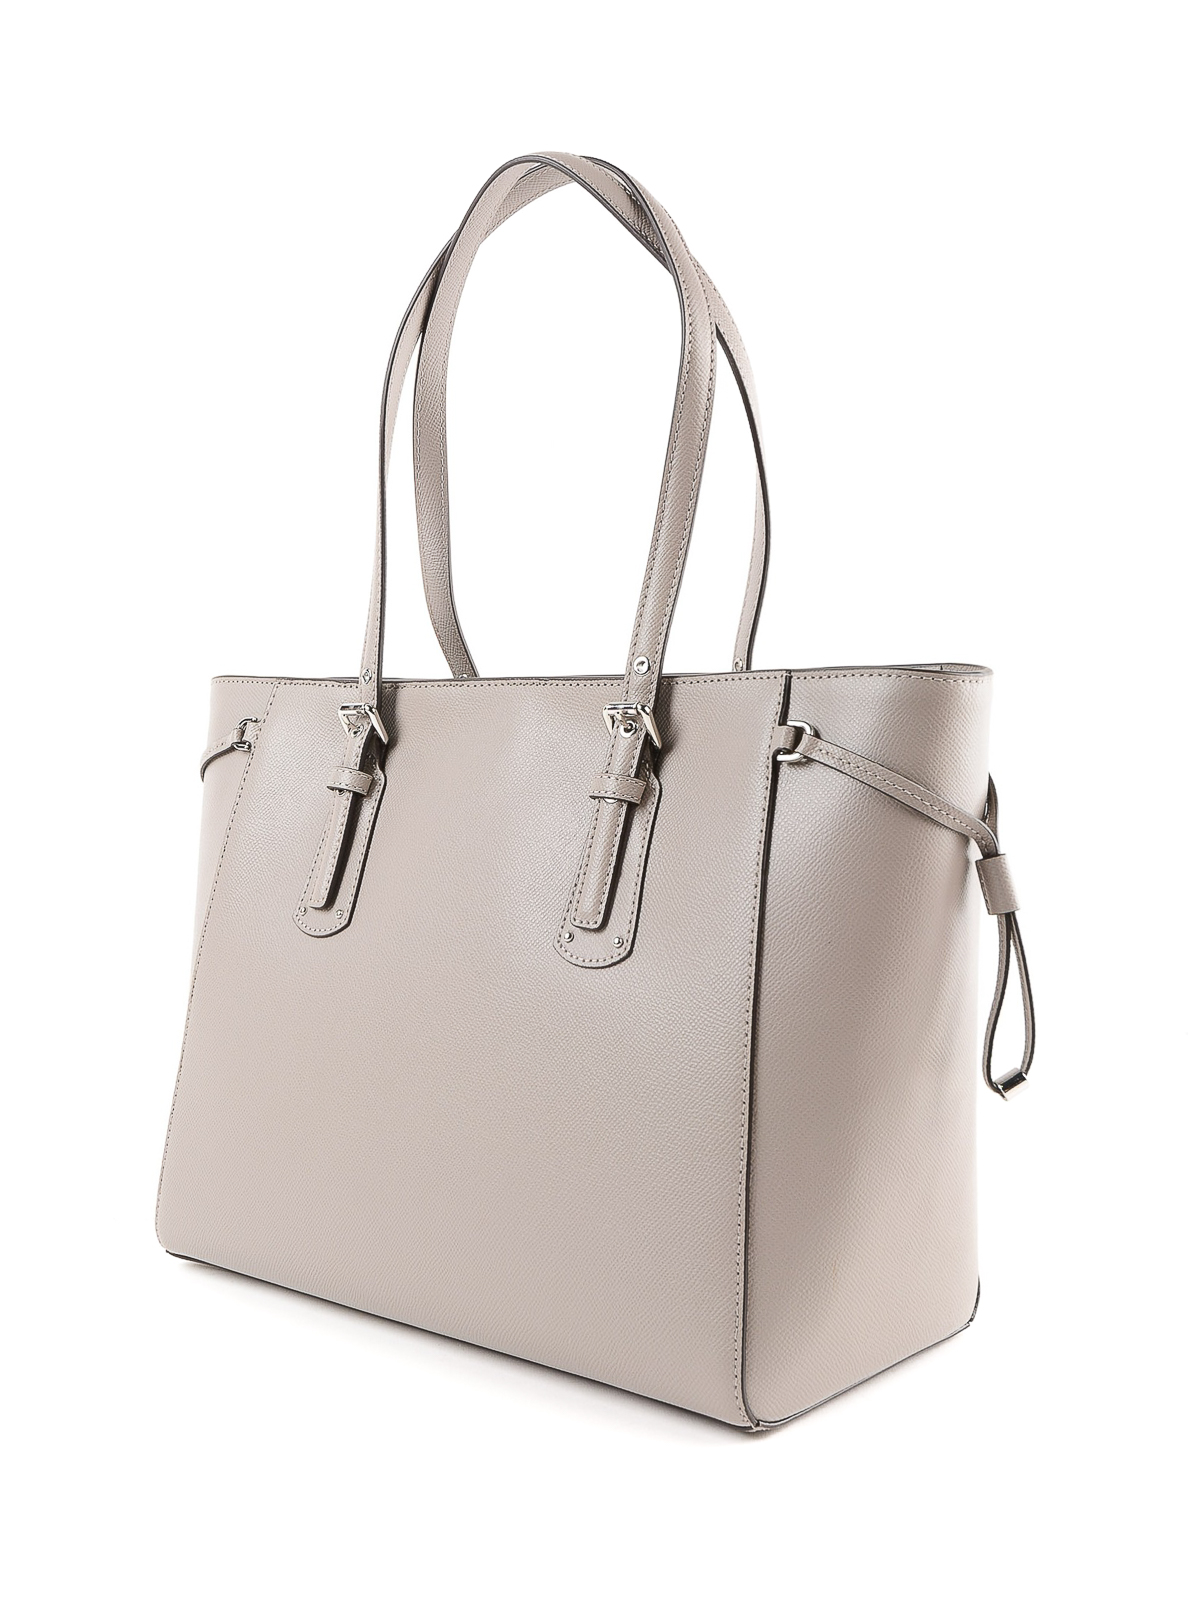 Totes bags Michael Kors - medium pearl grey leather tote - 30H7SV6T8L081